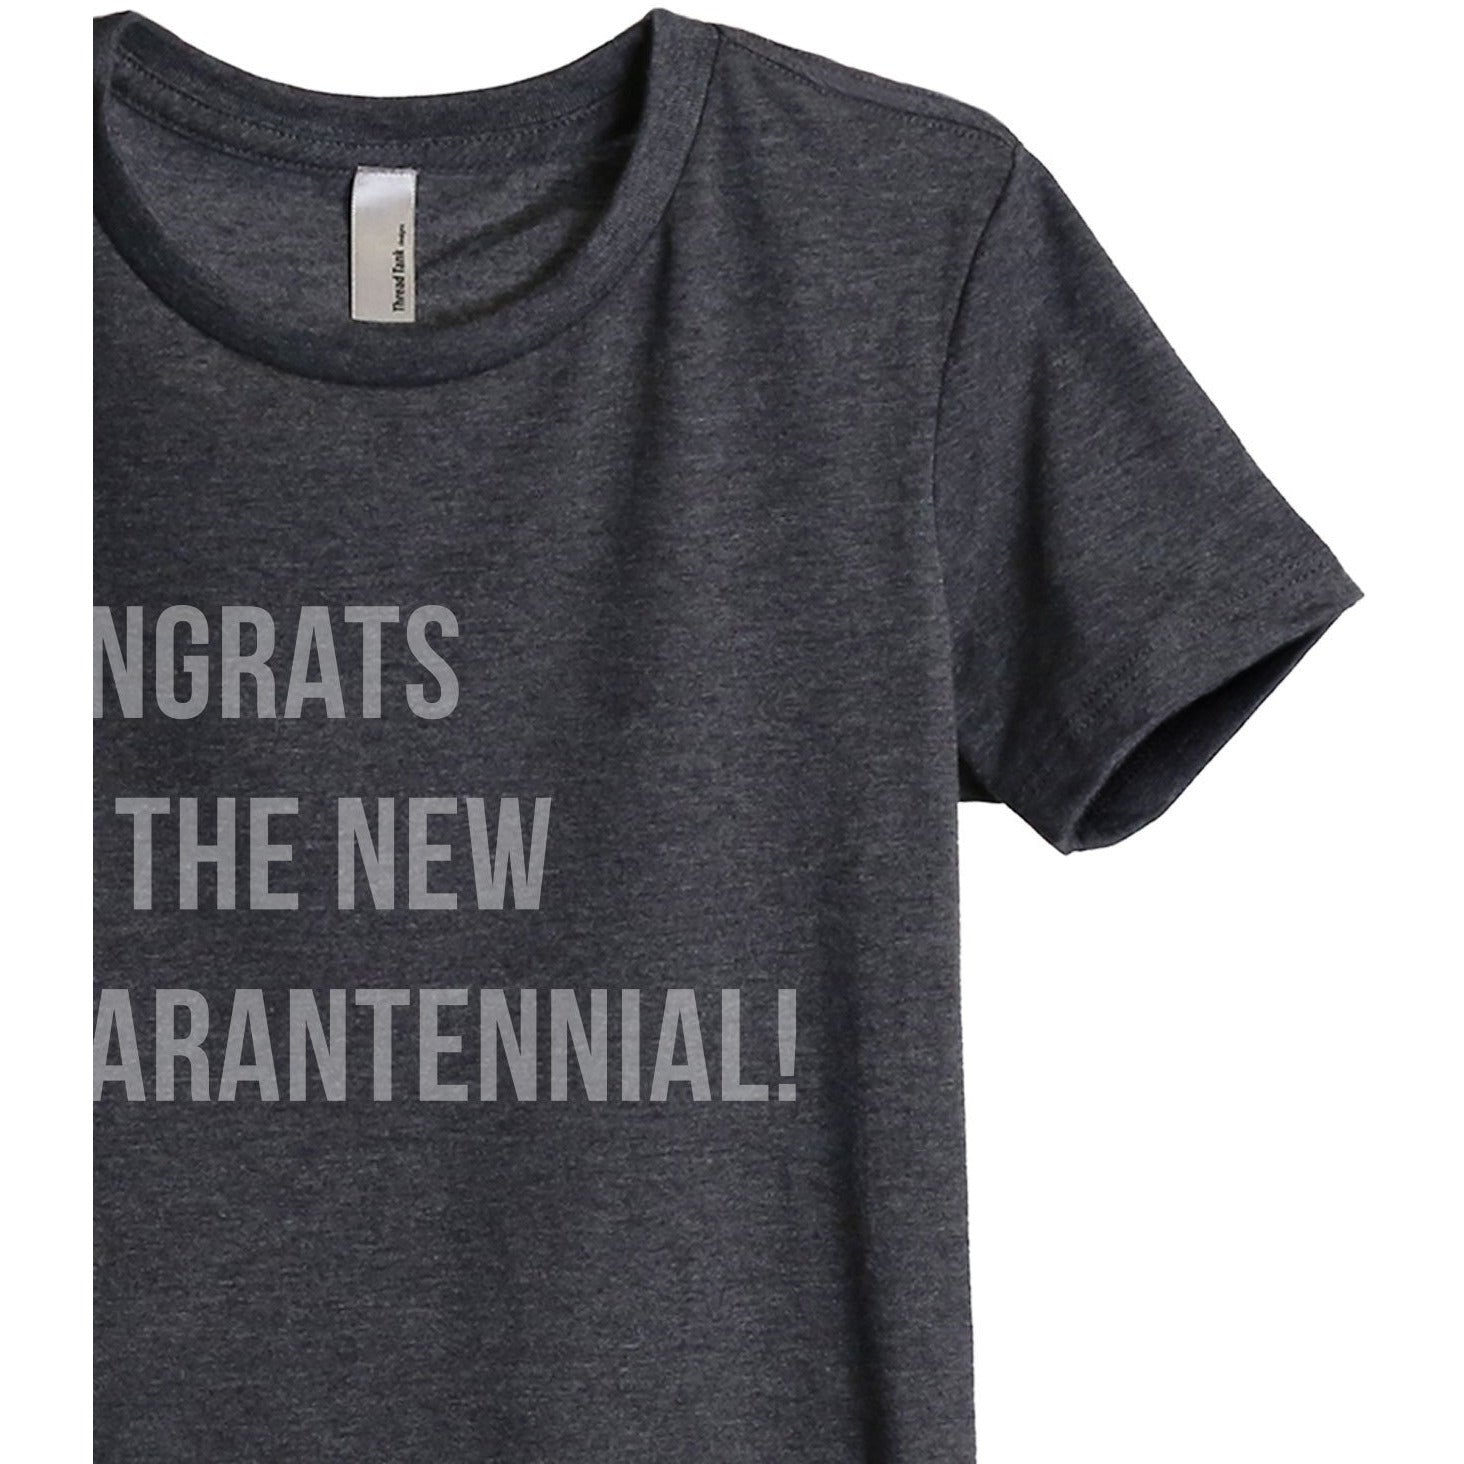 Congrats On The New Quarantennial Women's Relaxed Crewneck T-Shirt Top Tee Charcoal Grey Zoom Details